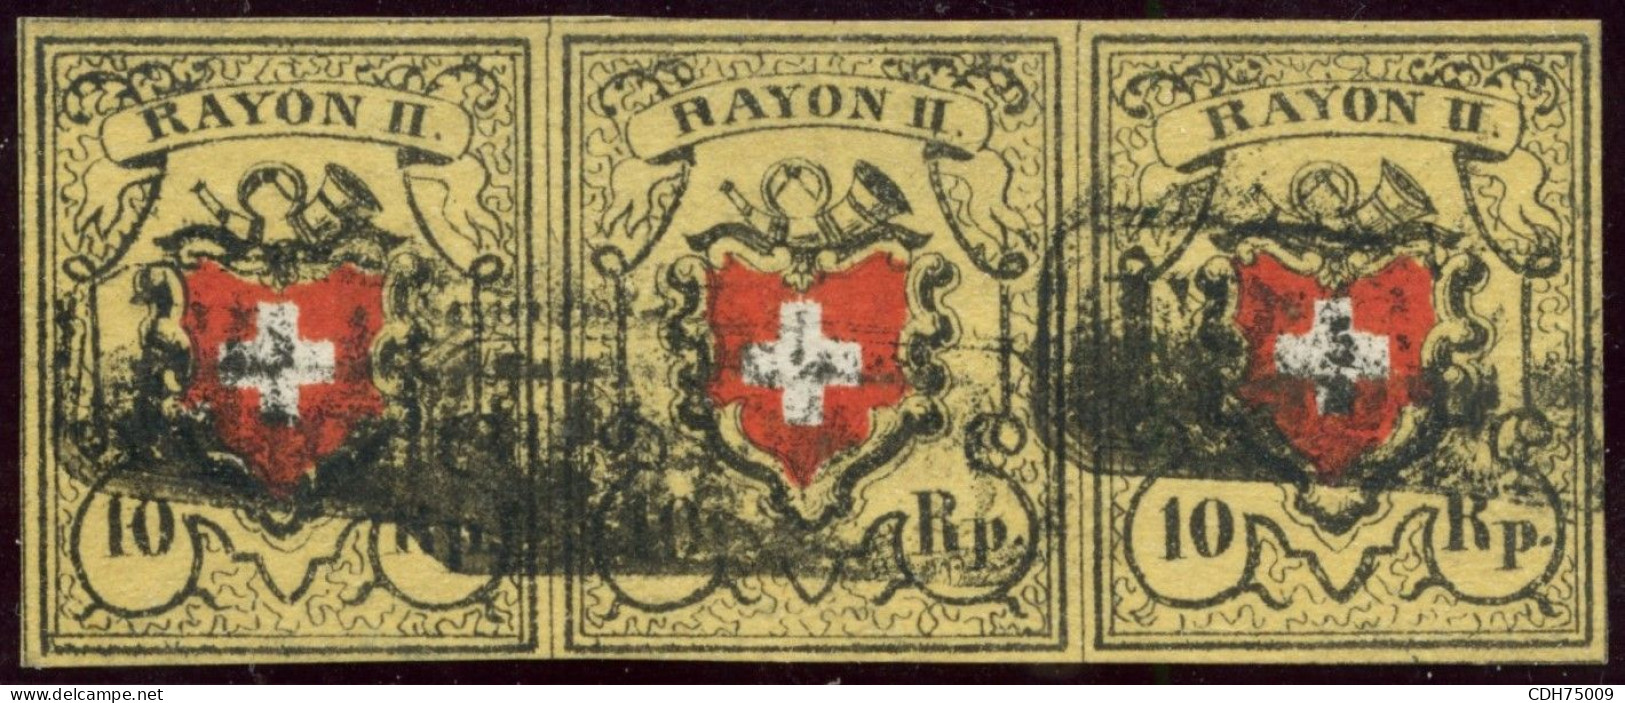 SUISSE - SBK 16 II  10 RAPPEN CROIX NON ENCADREE - BANDE DE 3 - POSITIONS 25 A 27 - OBLITEREE - 1843-1852 Kantonalmarken Und Bundesmarken